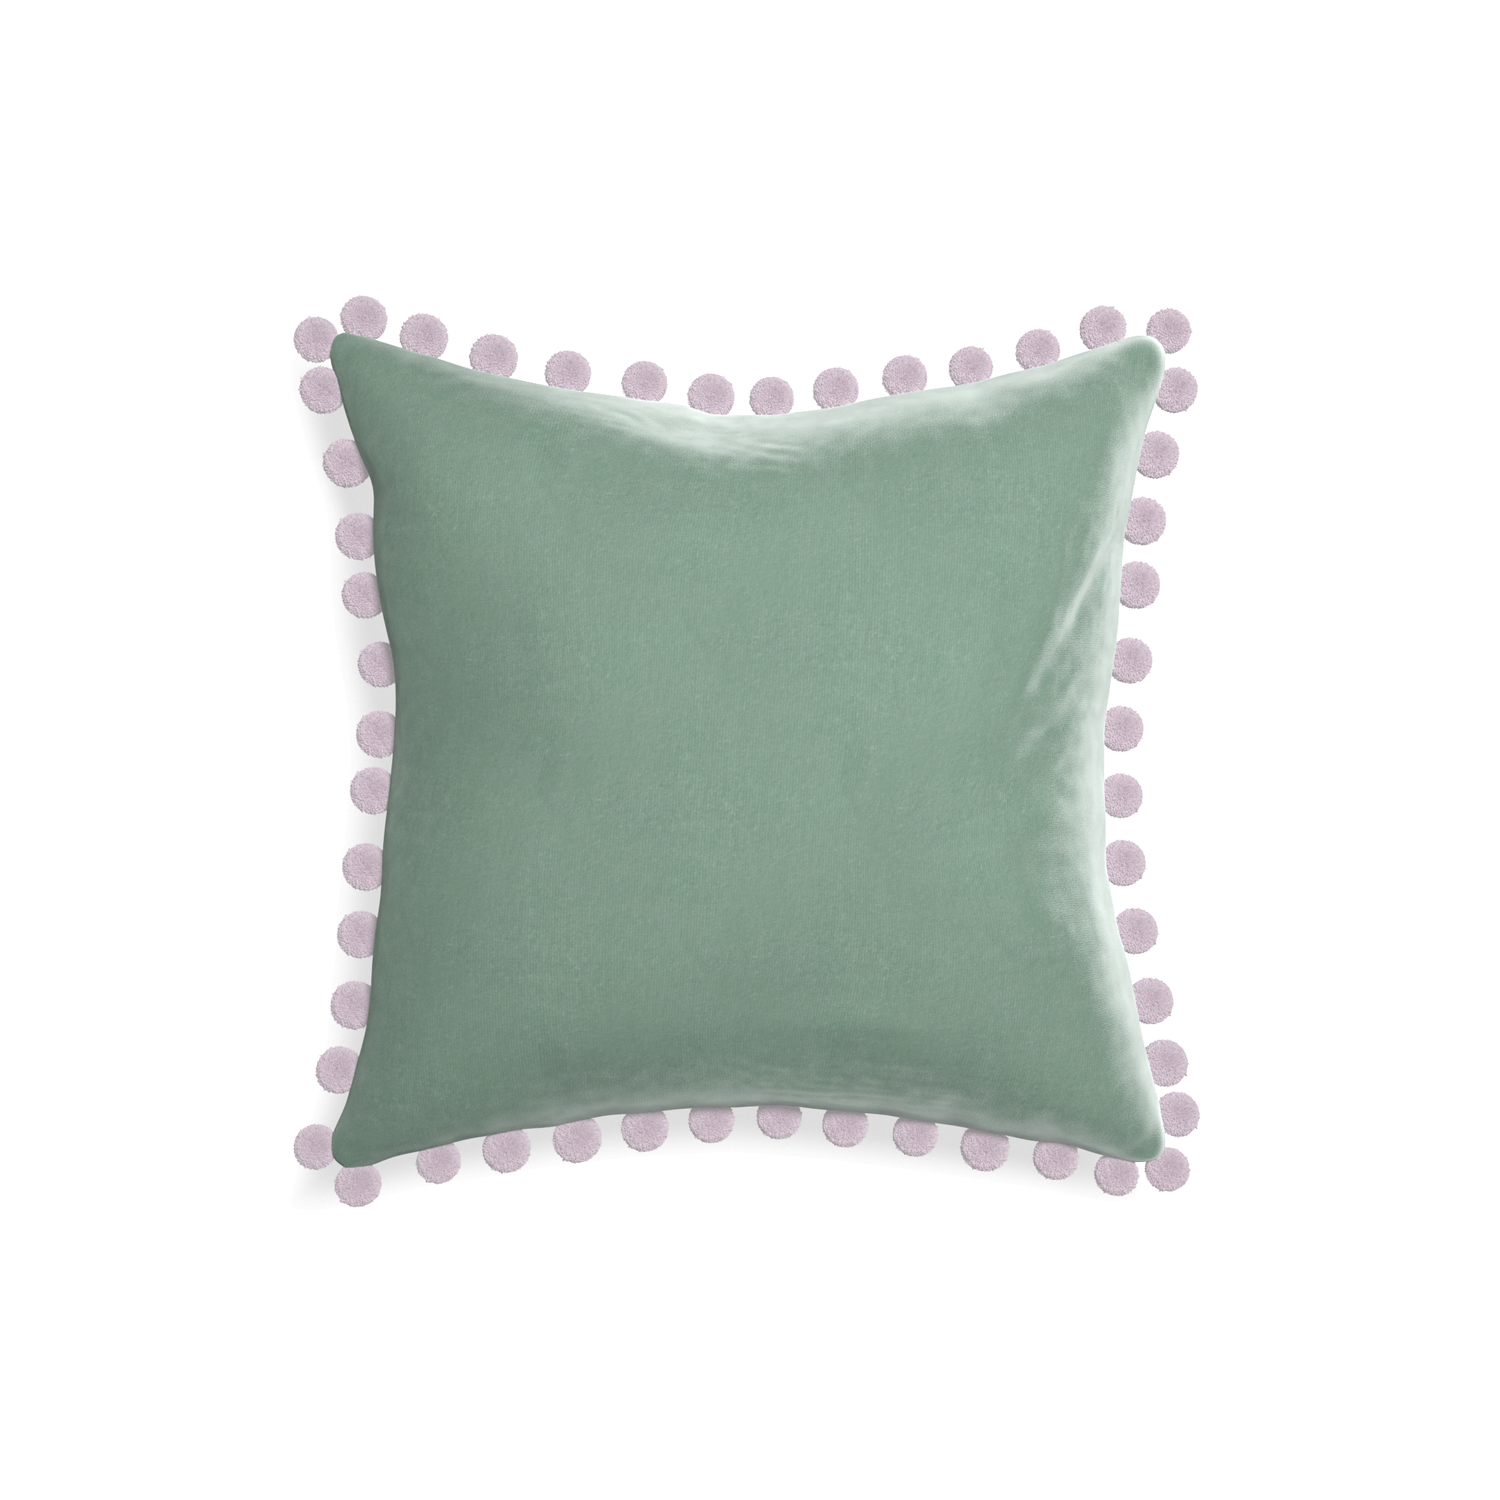 square blue green velvet pillow with lilac pom poms